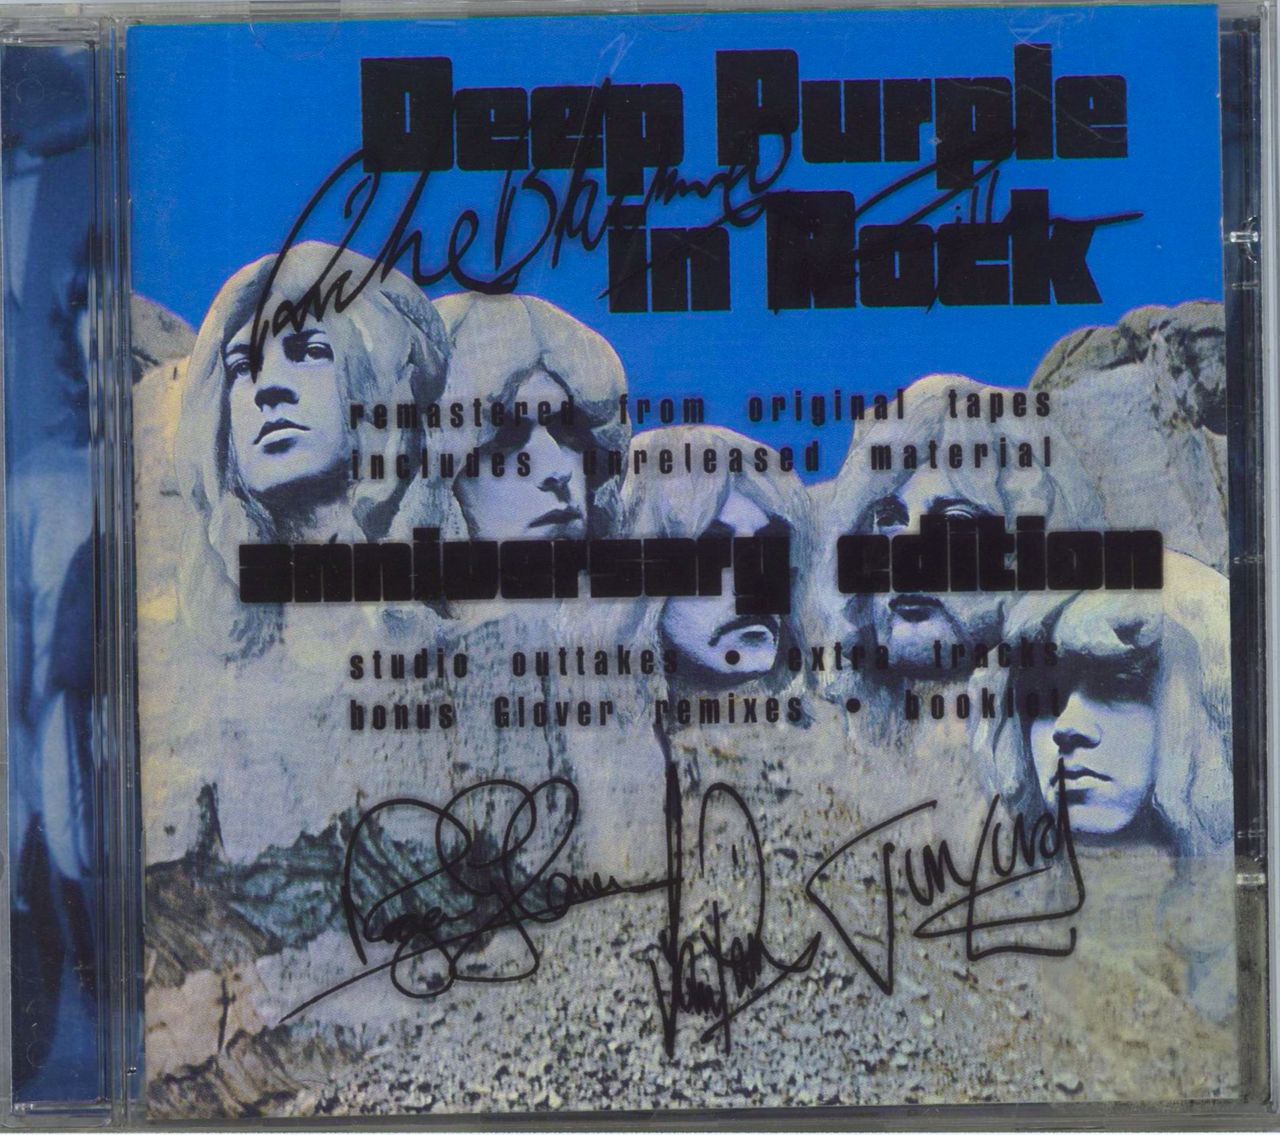 Deep Purple In Rock: Anniversary Edition Dutch CD album — RareVinyl.com